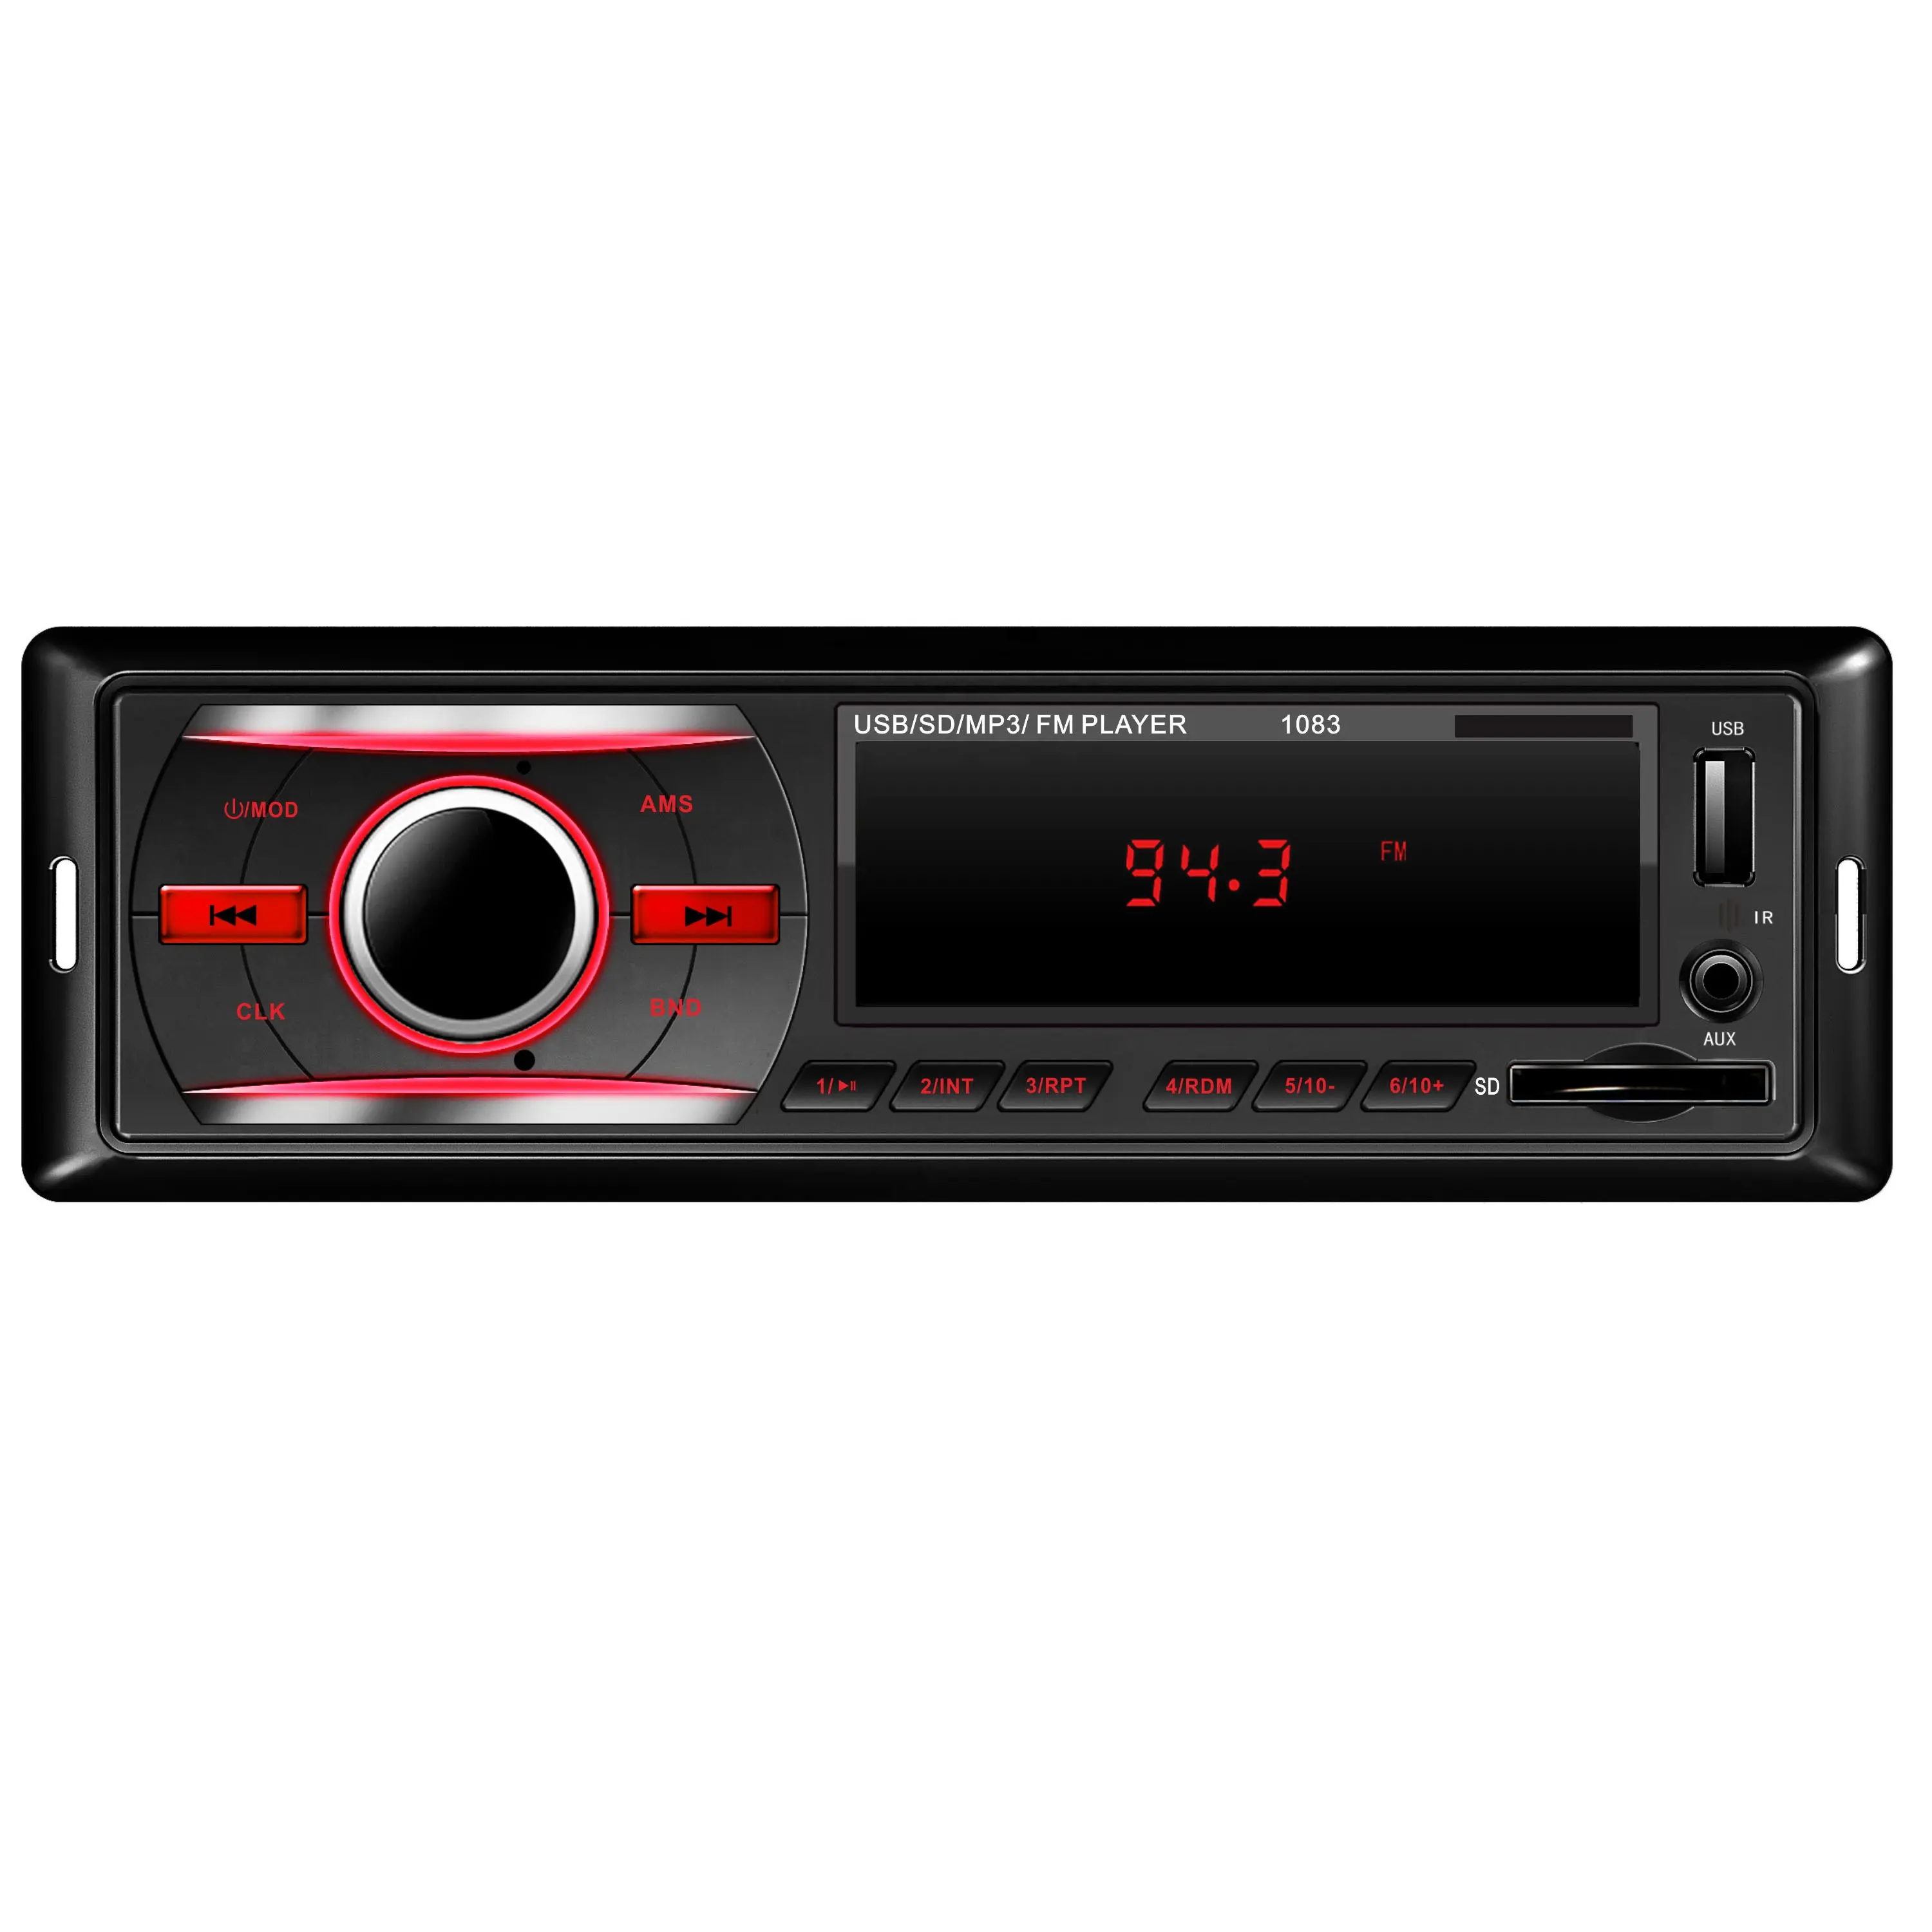 बीटी एसडी यूएसबी औक्स के साथ अग्रणी कार ऑडियो कार स्टीरियो MP3 प्लेयर एलसीडी पैनल एलईडी पैनल विकल्प के साथ कार स्टीरियो